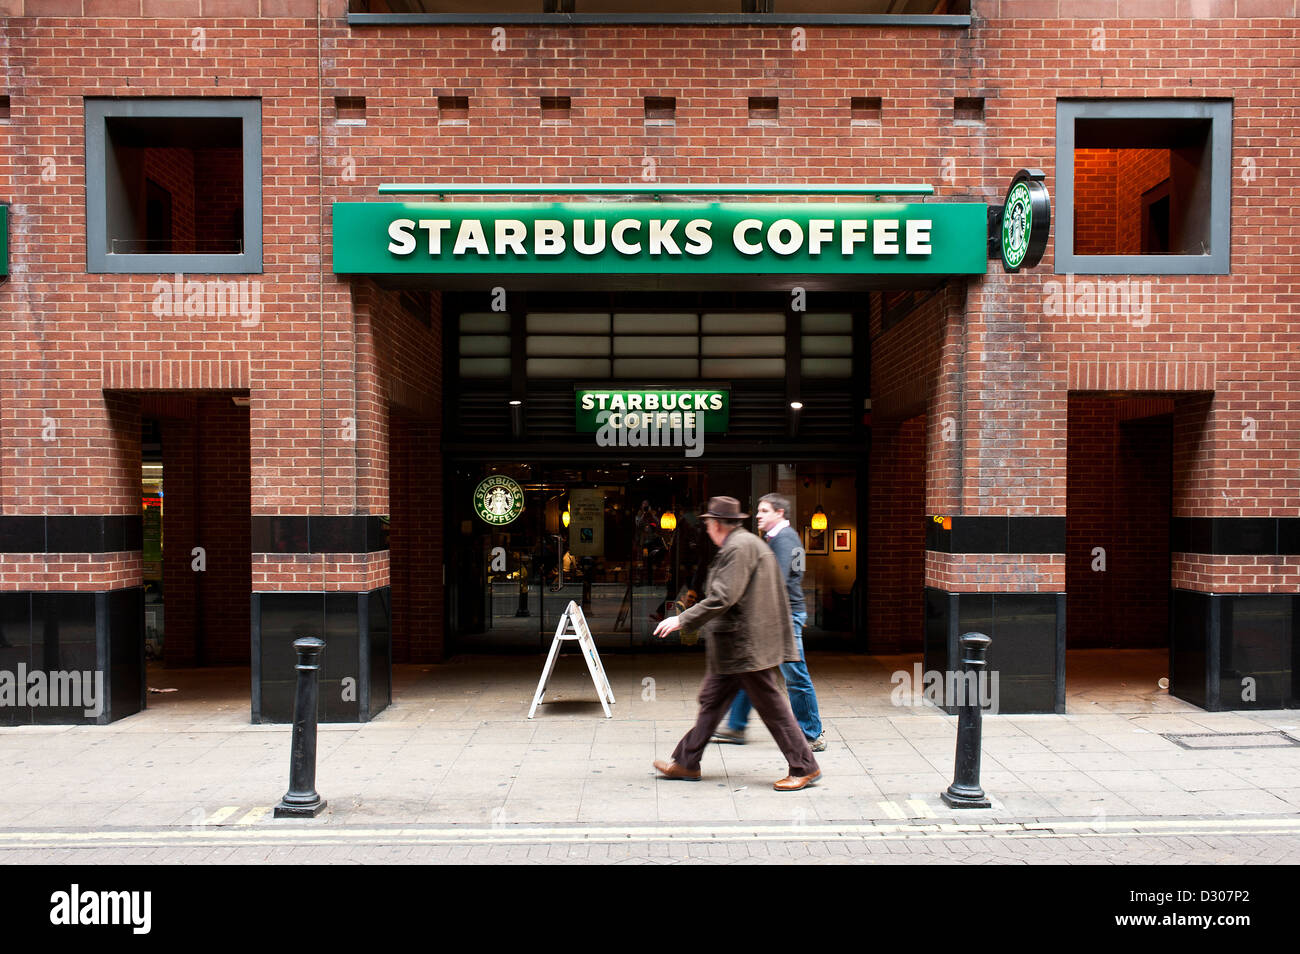 Starbucks Coffee shop in London, UK Stock Photo